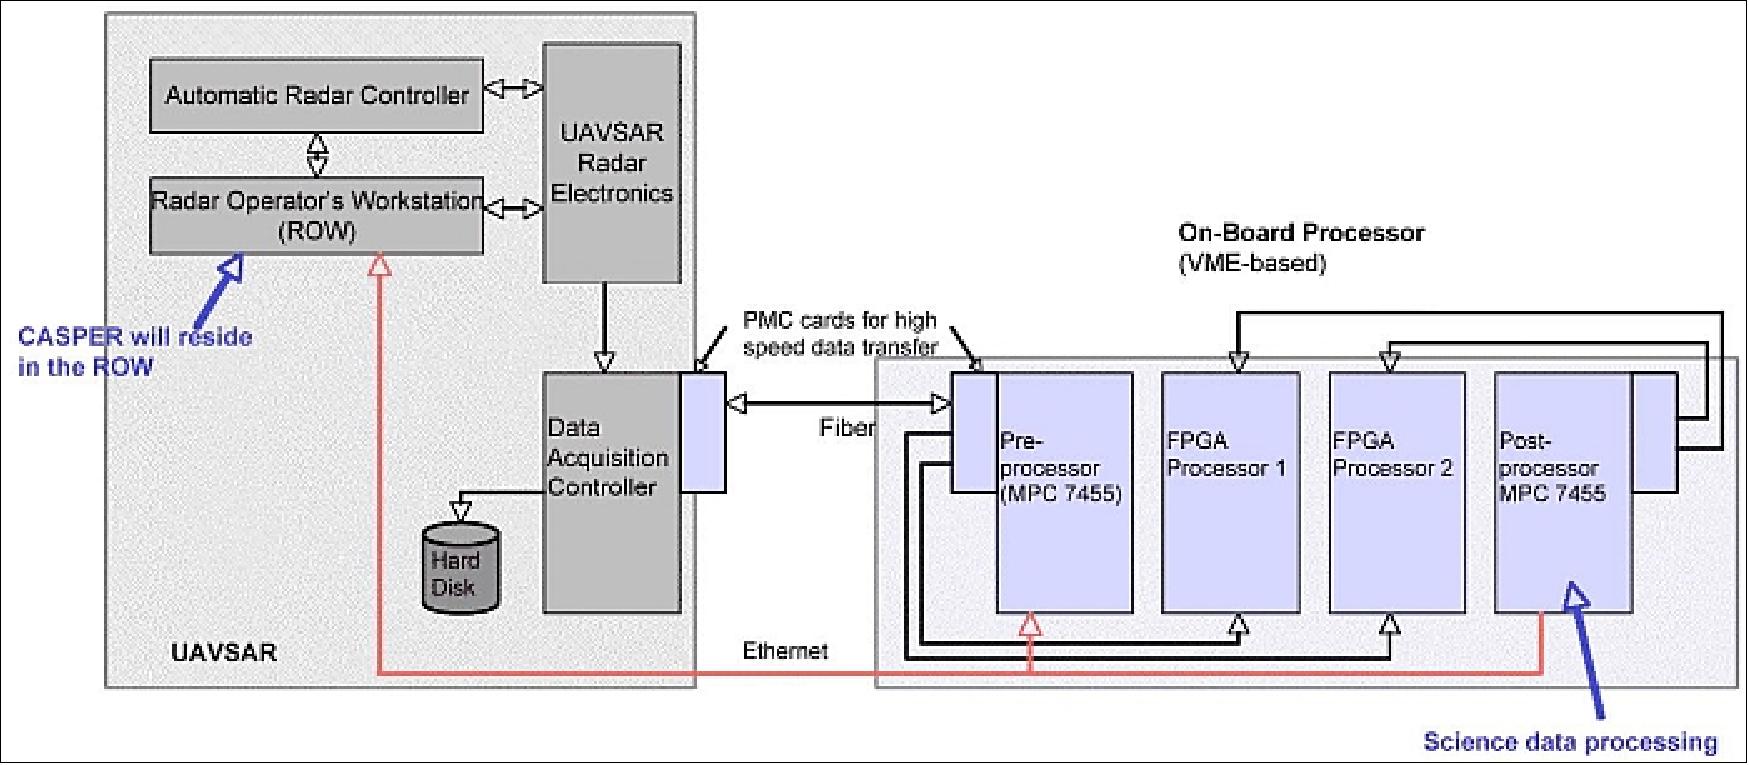 Figure 27: High level hardware architecture of the UAVSAR smart sensor (image credit: NASA/JPL)